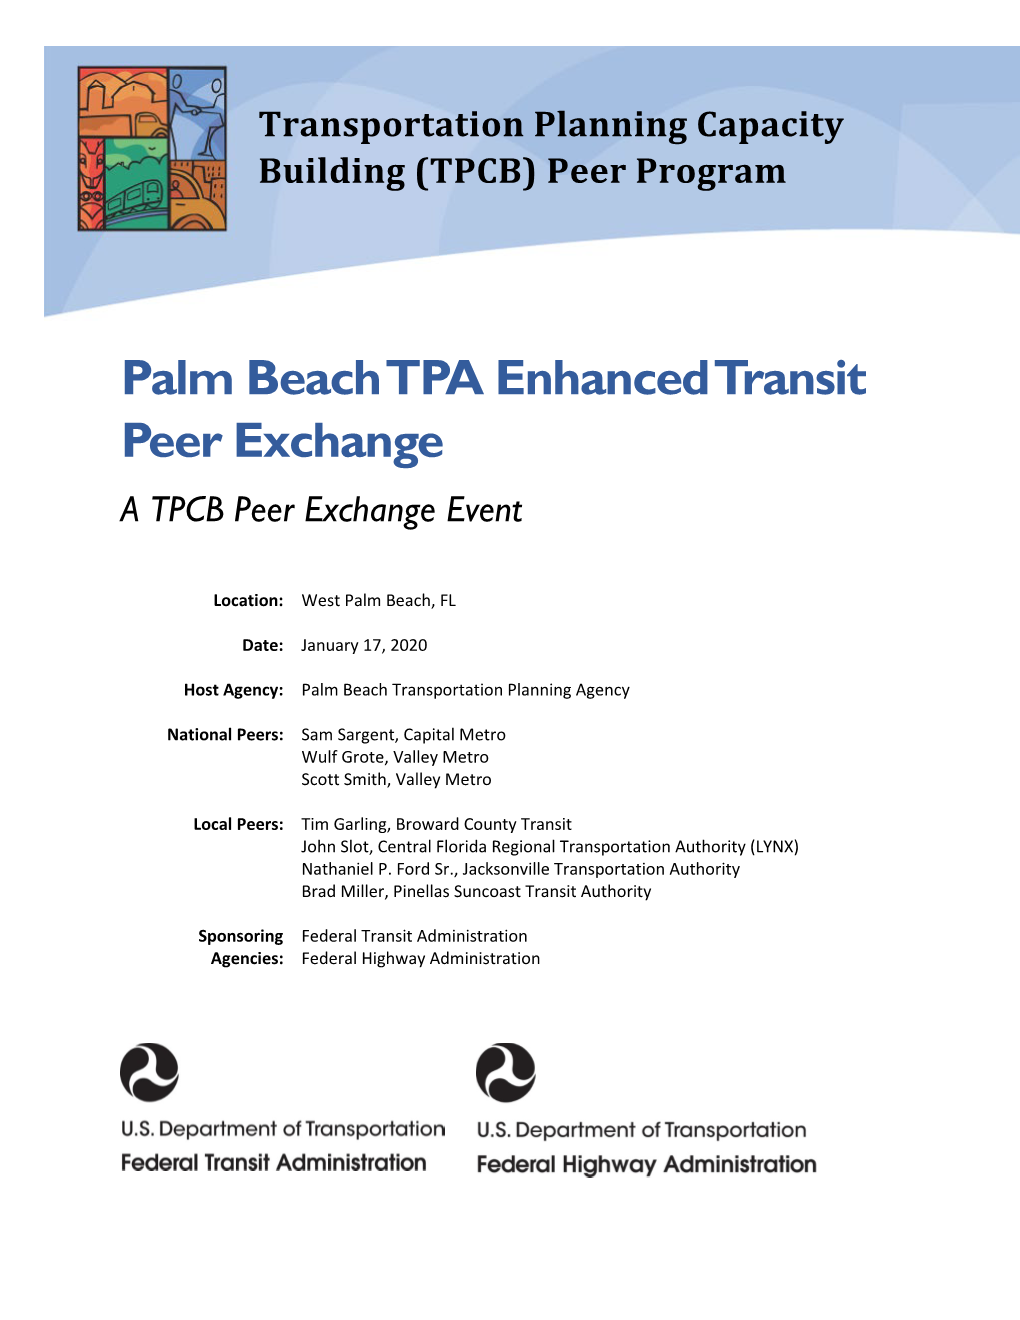 Palm Beach TPA Enhanced Transit Peer Exchange a TPCB Peer Exchange Event